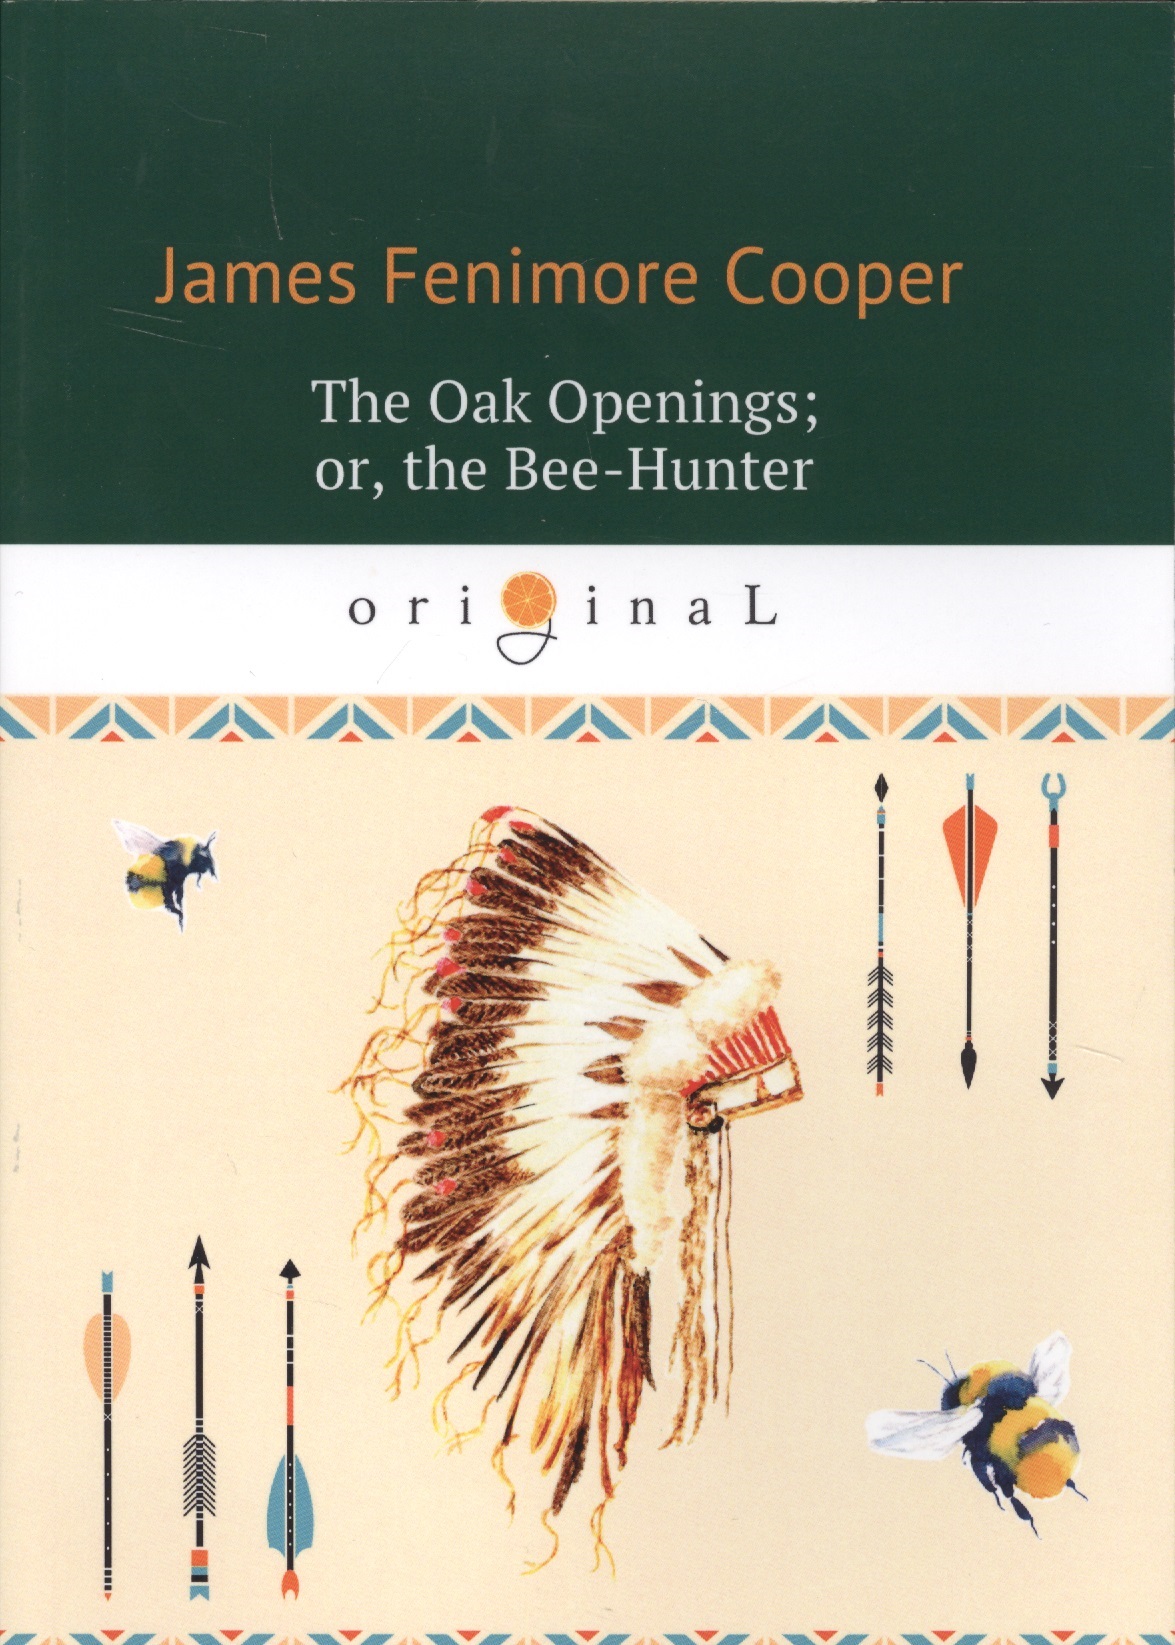 The Oak Openings, or, the Bee-Hunter = Прогалины в дубровах, или Охотник за пчелами (на английском языке) cooper james fenimore the oak openings or the bee hunter